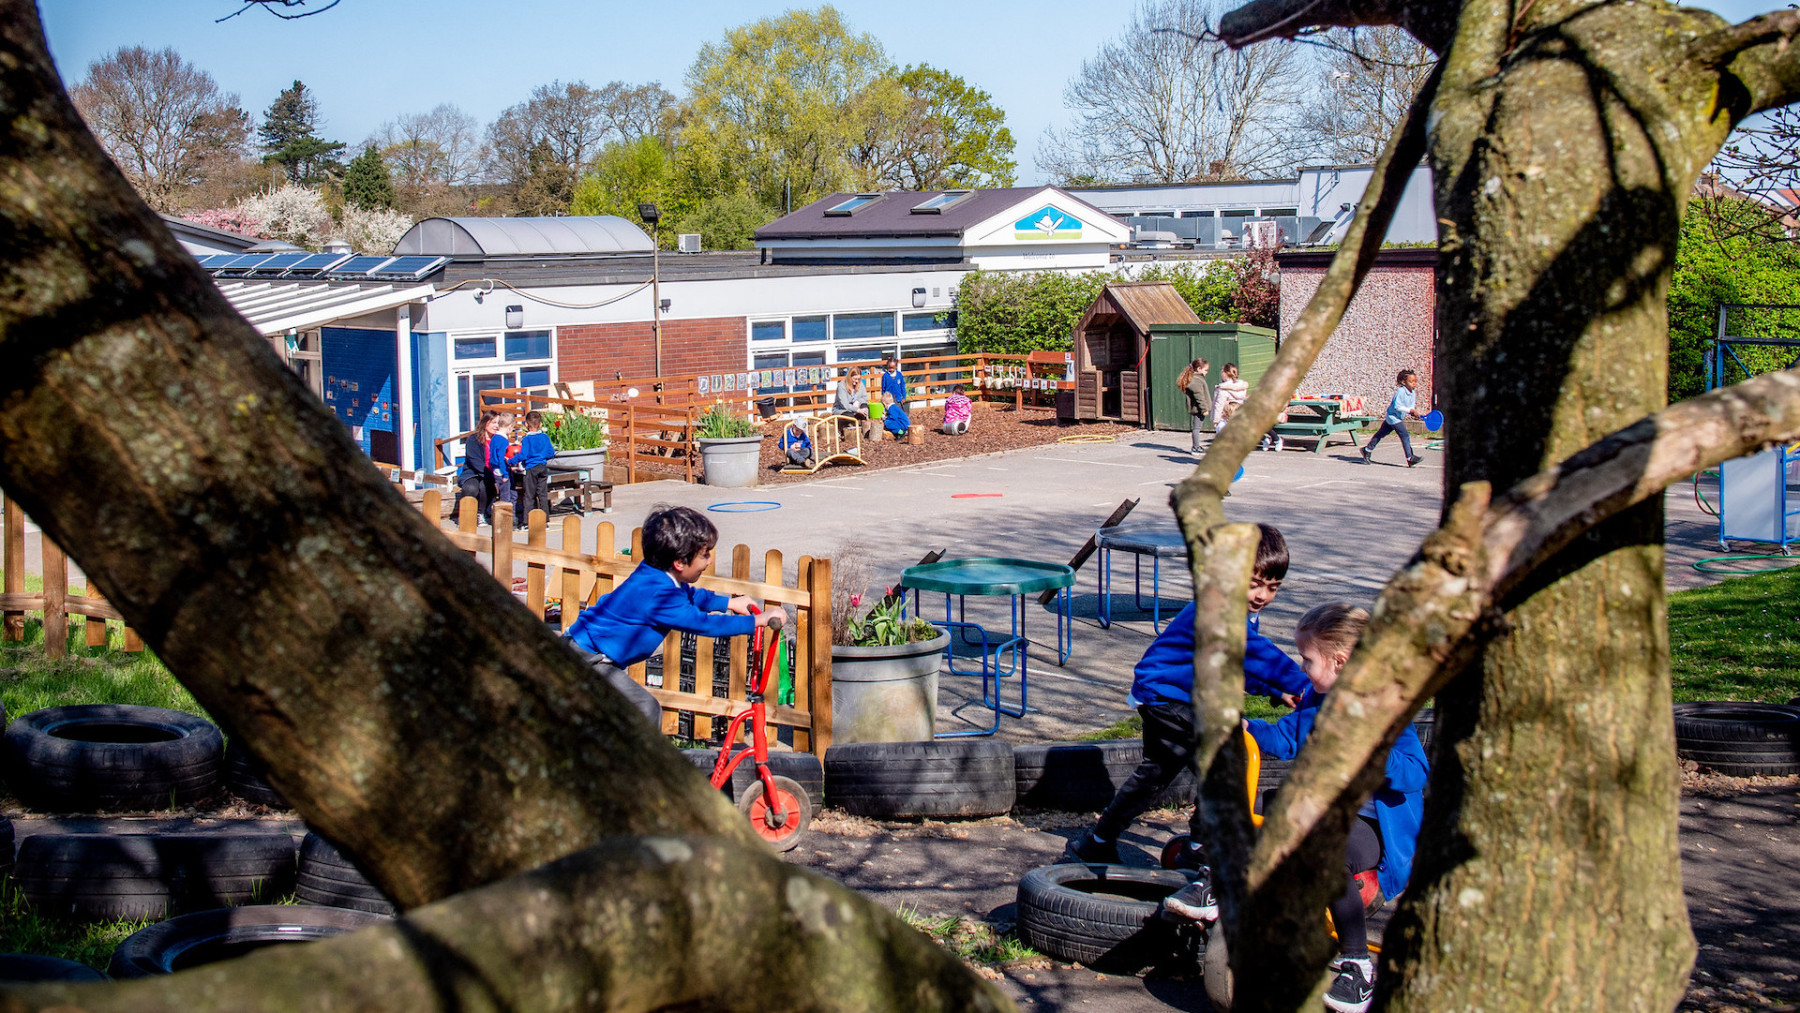 We love the Wroxham School written using wooden blocks on the grass